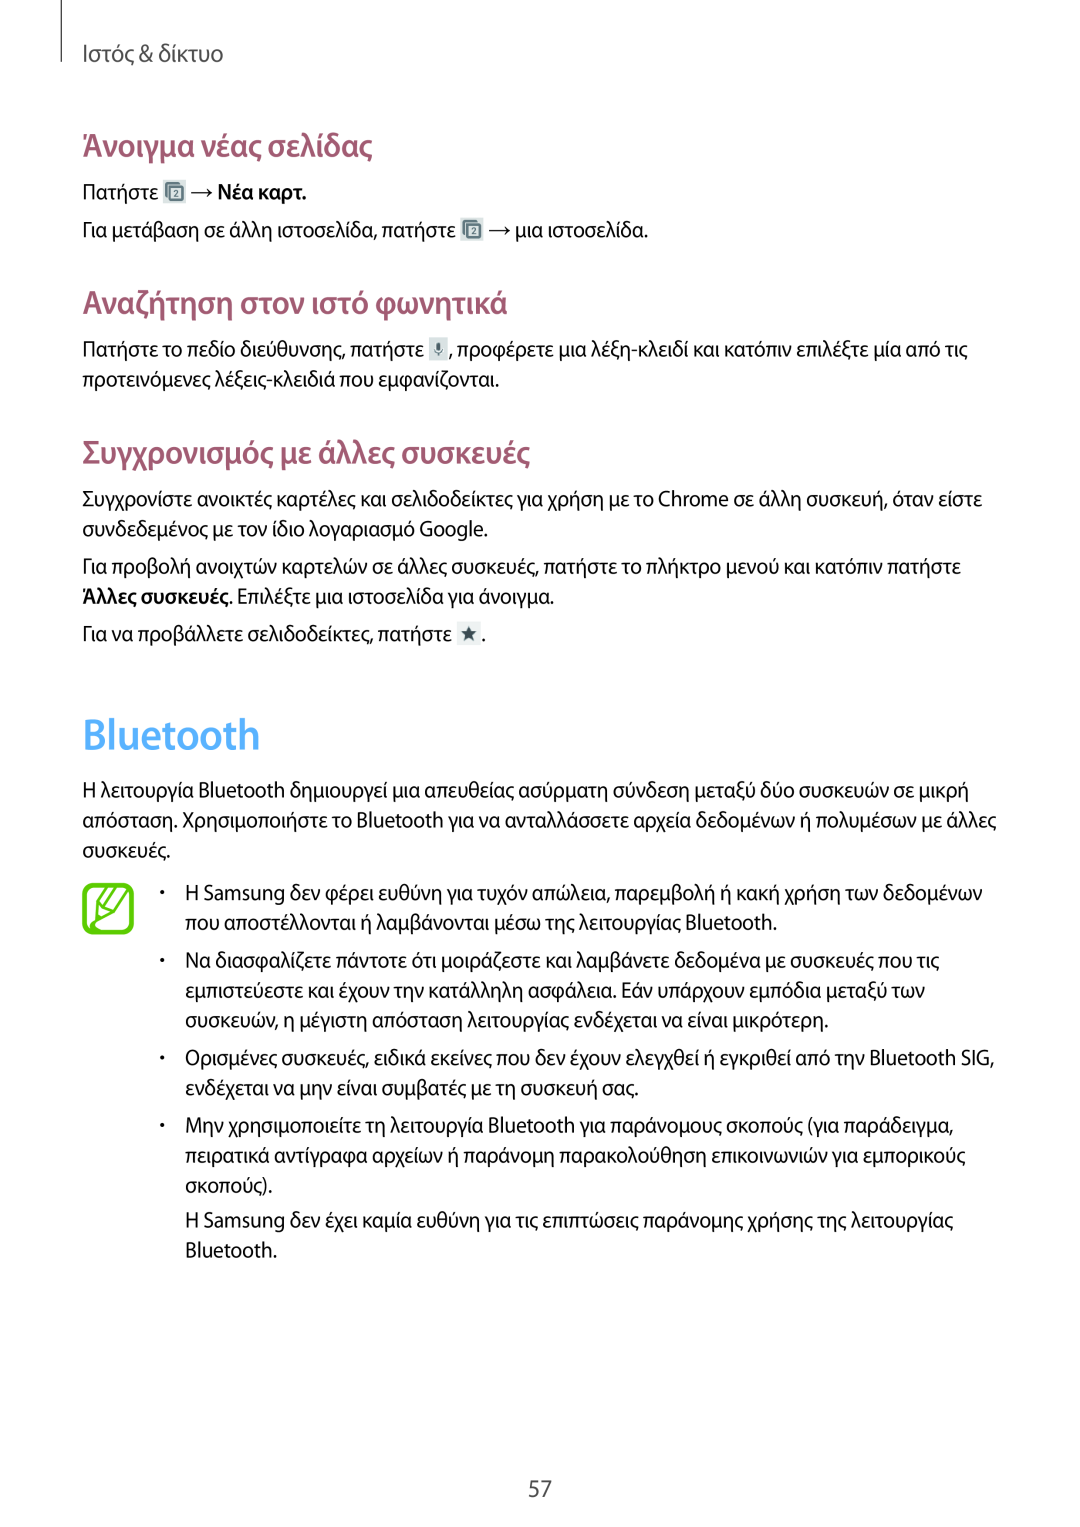 Samsung GT-S7710TAAVGR manual Bluetooth, Συγχρονισμός με άλλες συσκευές, Άνοιγμα νέας σελίδας, Αναζήτηση στον ιστό φωνητικά 